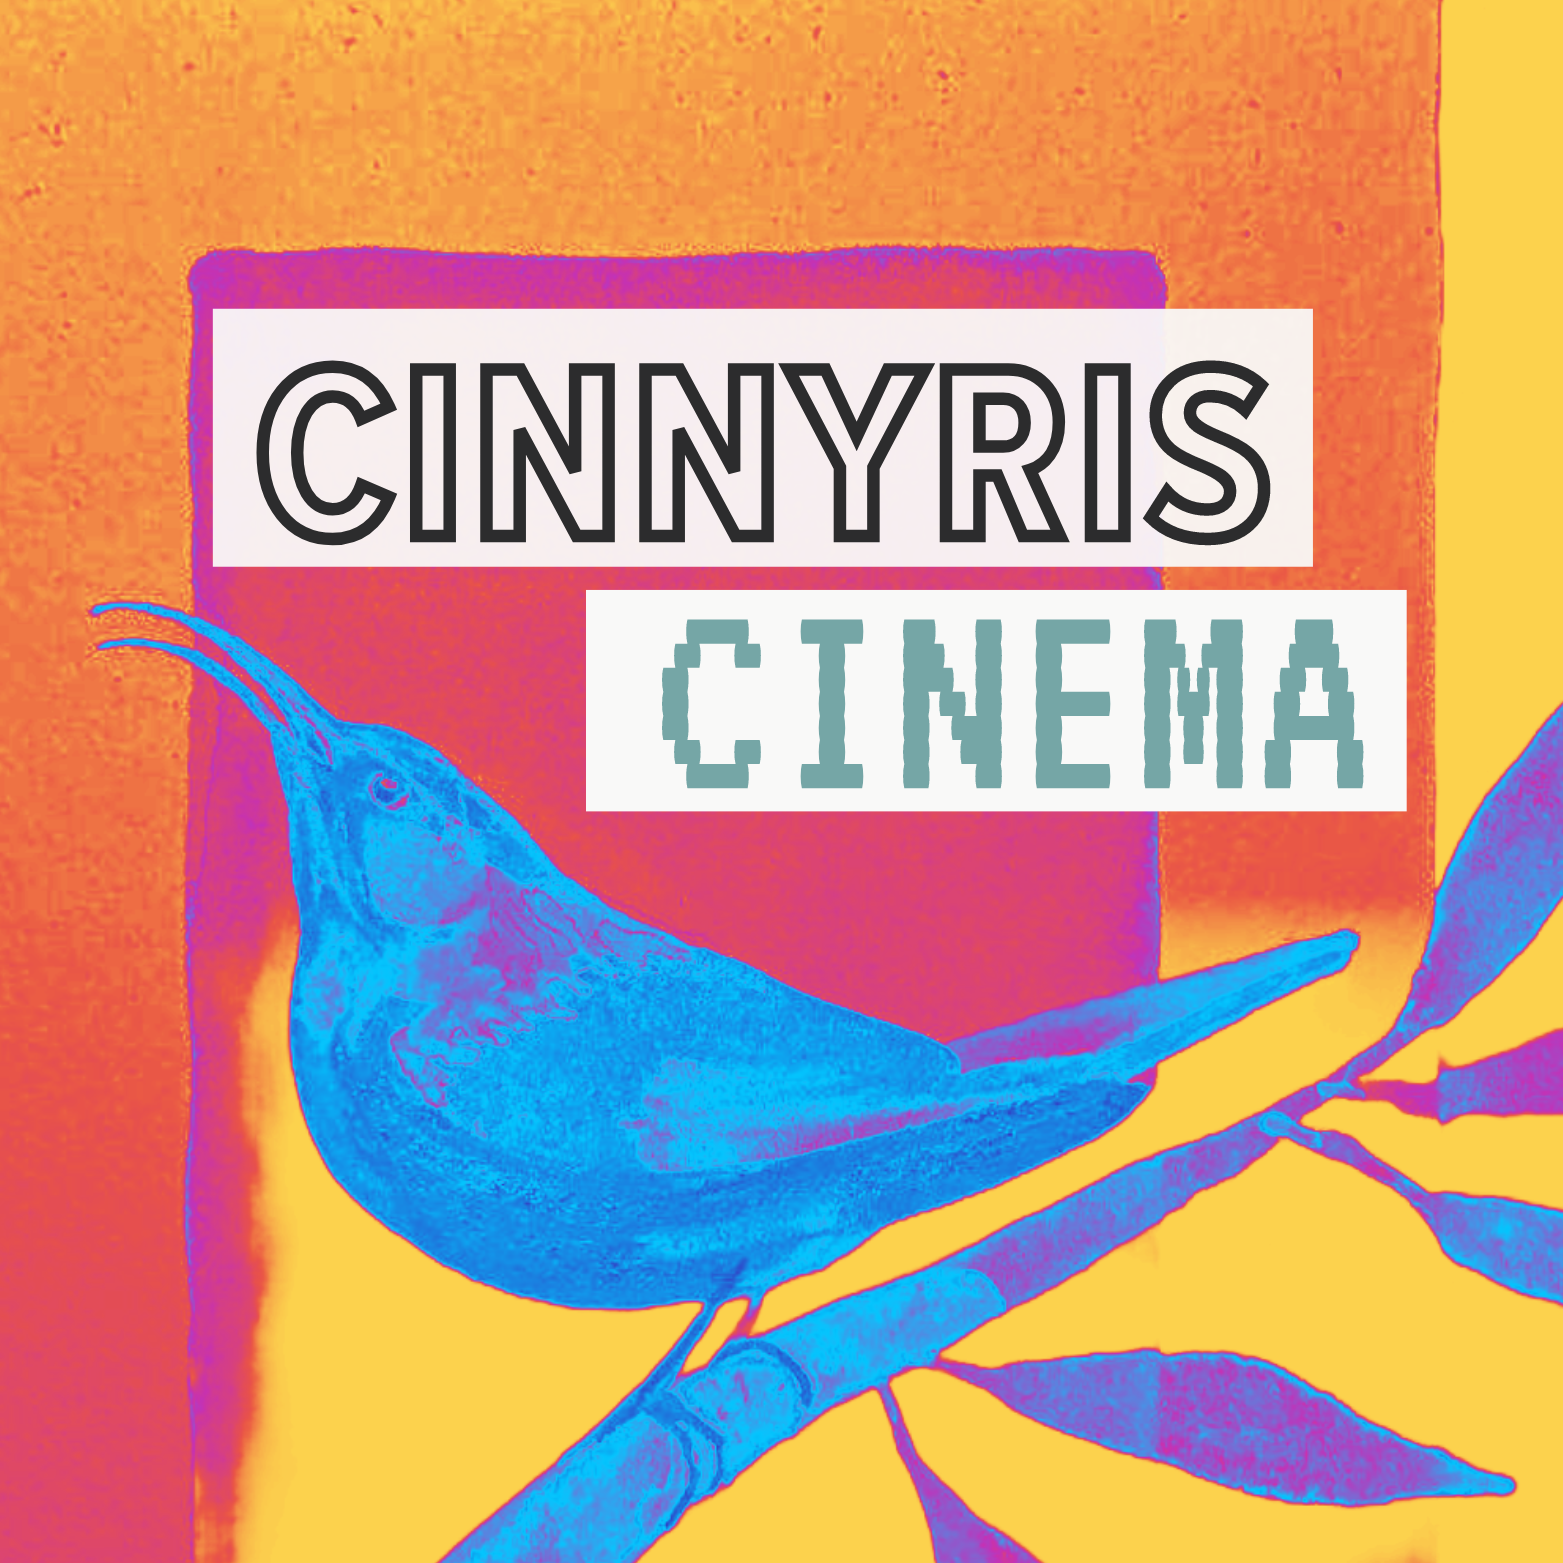 cinnyris cinema Norwich logo